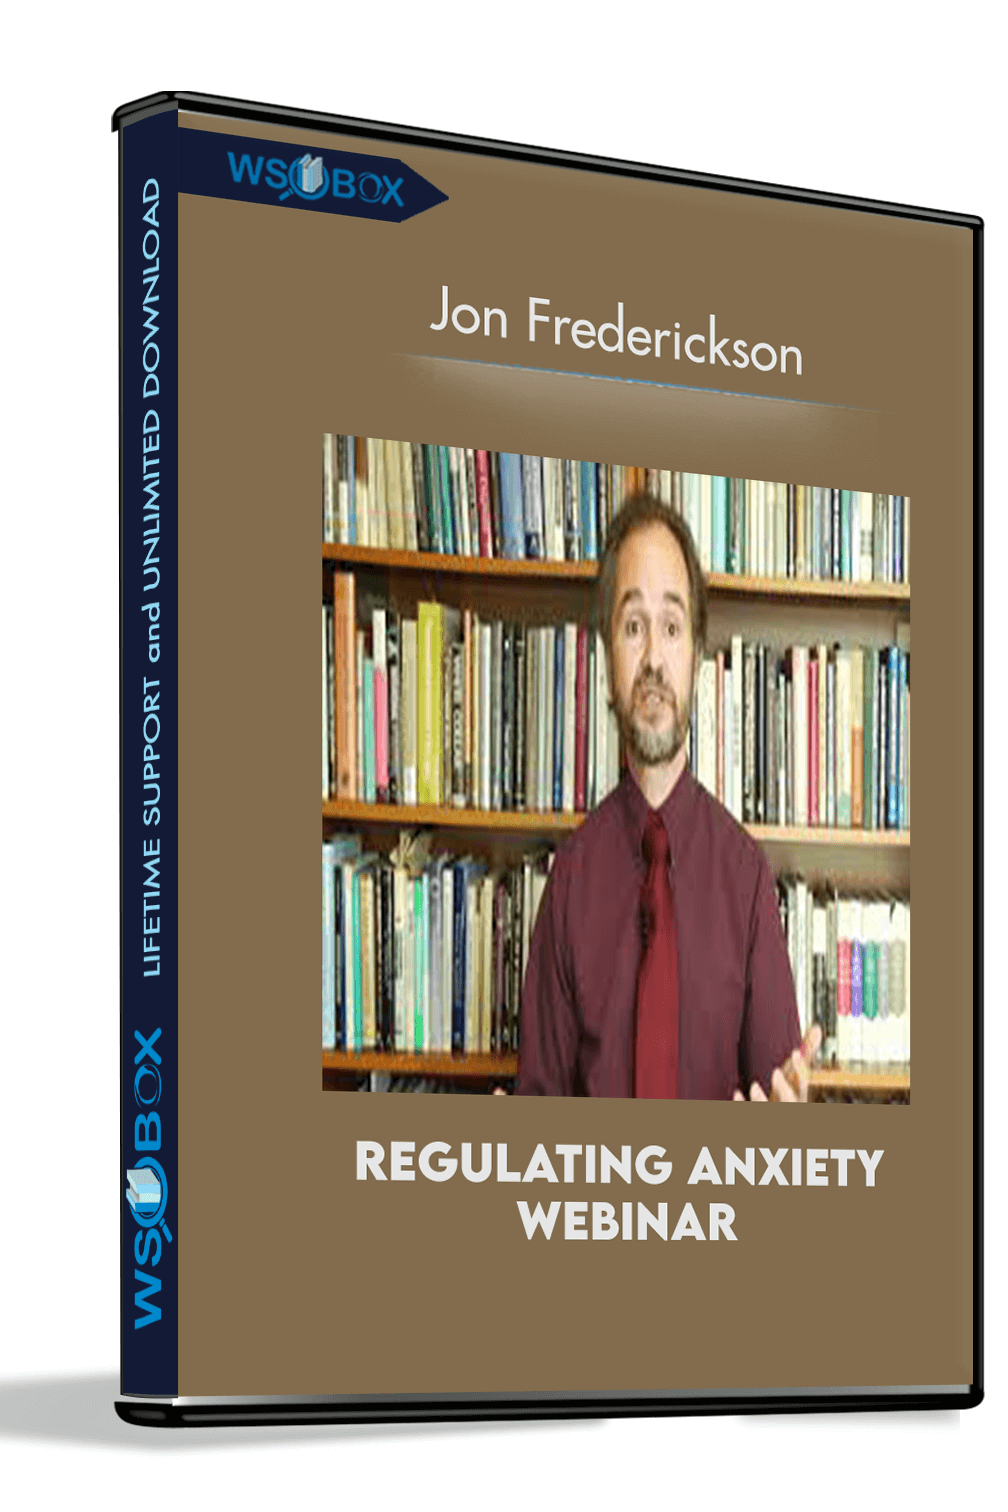 regulating-anxiety-webinar-jon-frederickson